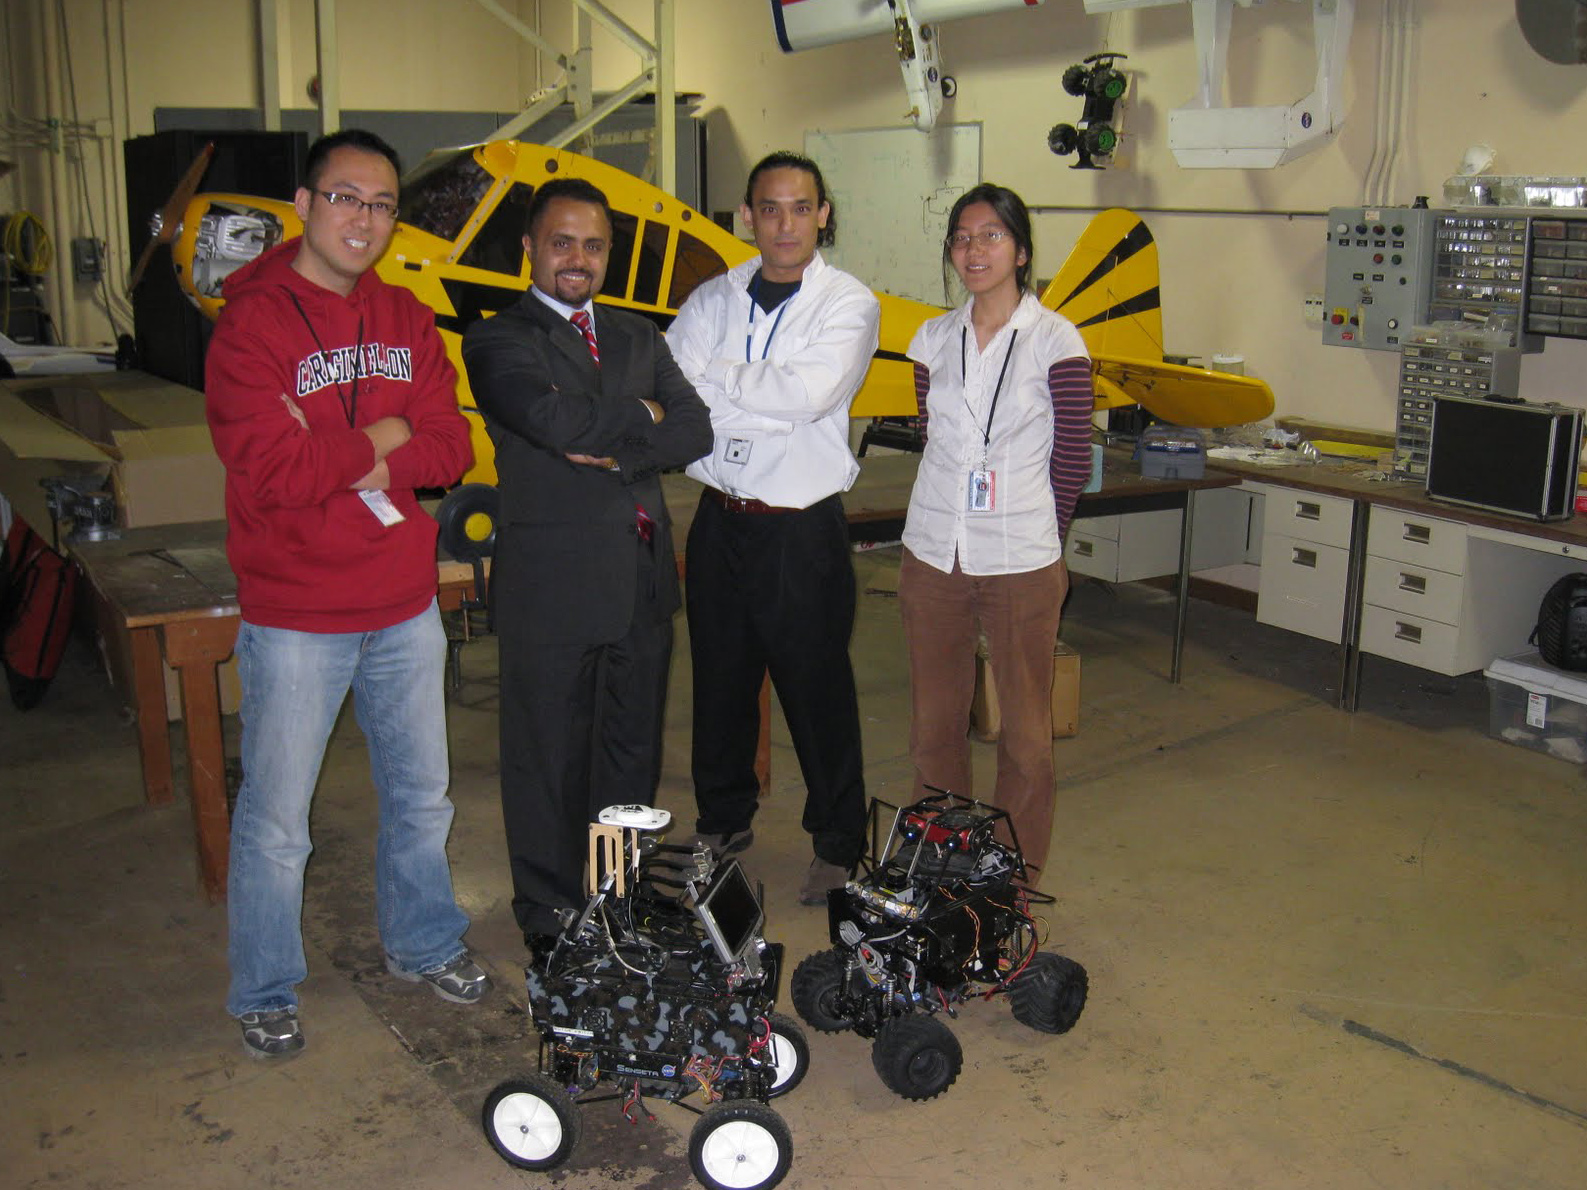 From left to right: Ritchie Lee, CMU; Khalid Al-Ali, Senseta; Corey Ippolito, NASA; Yoohsiu Yeh, CMU. (NASA)